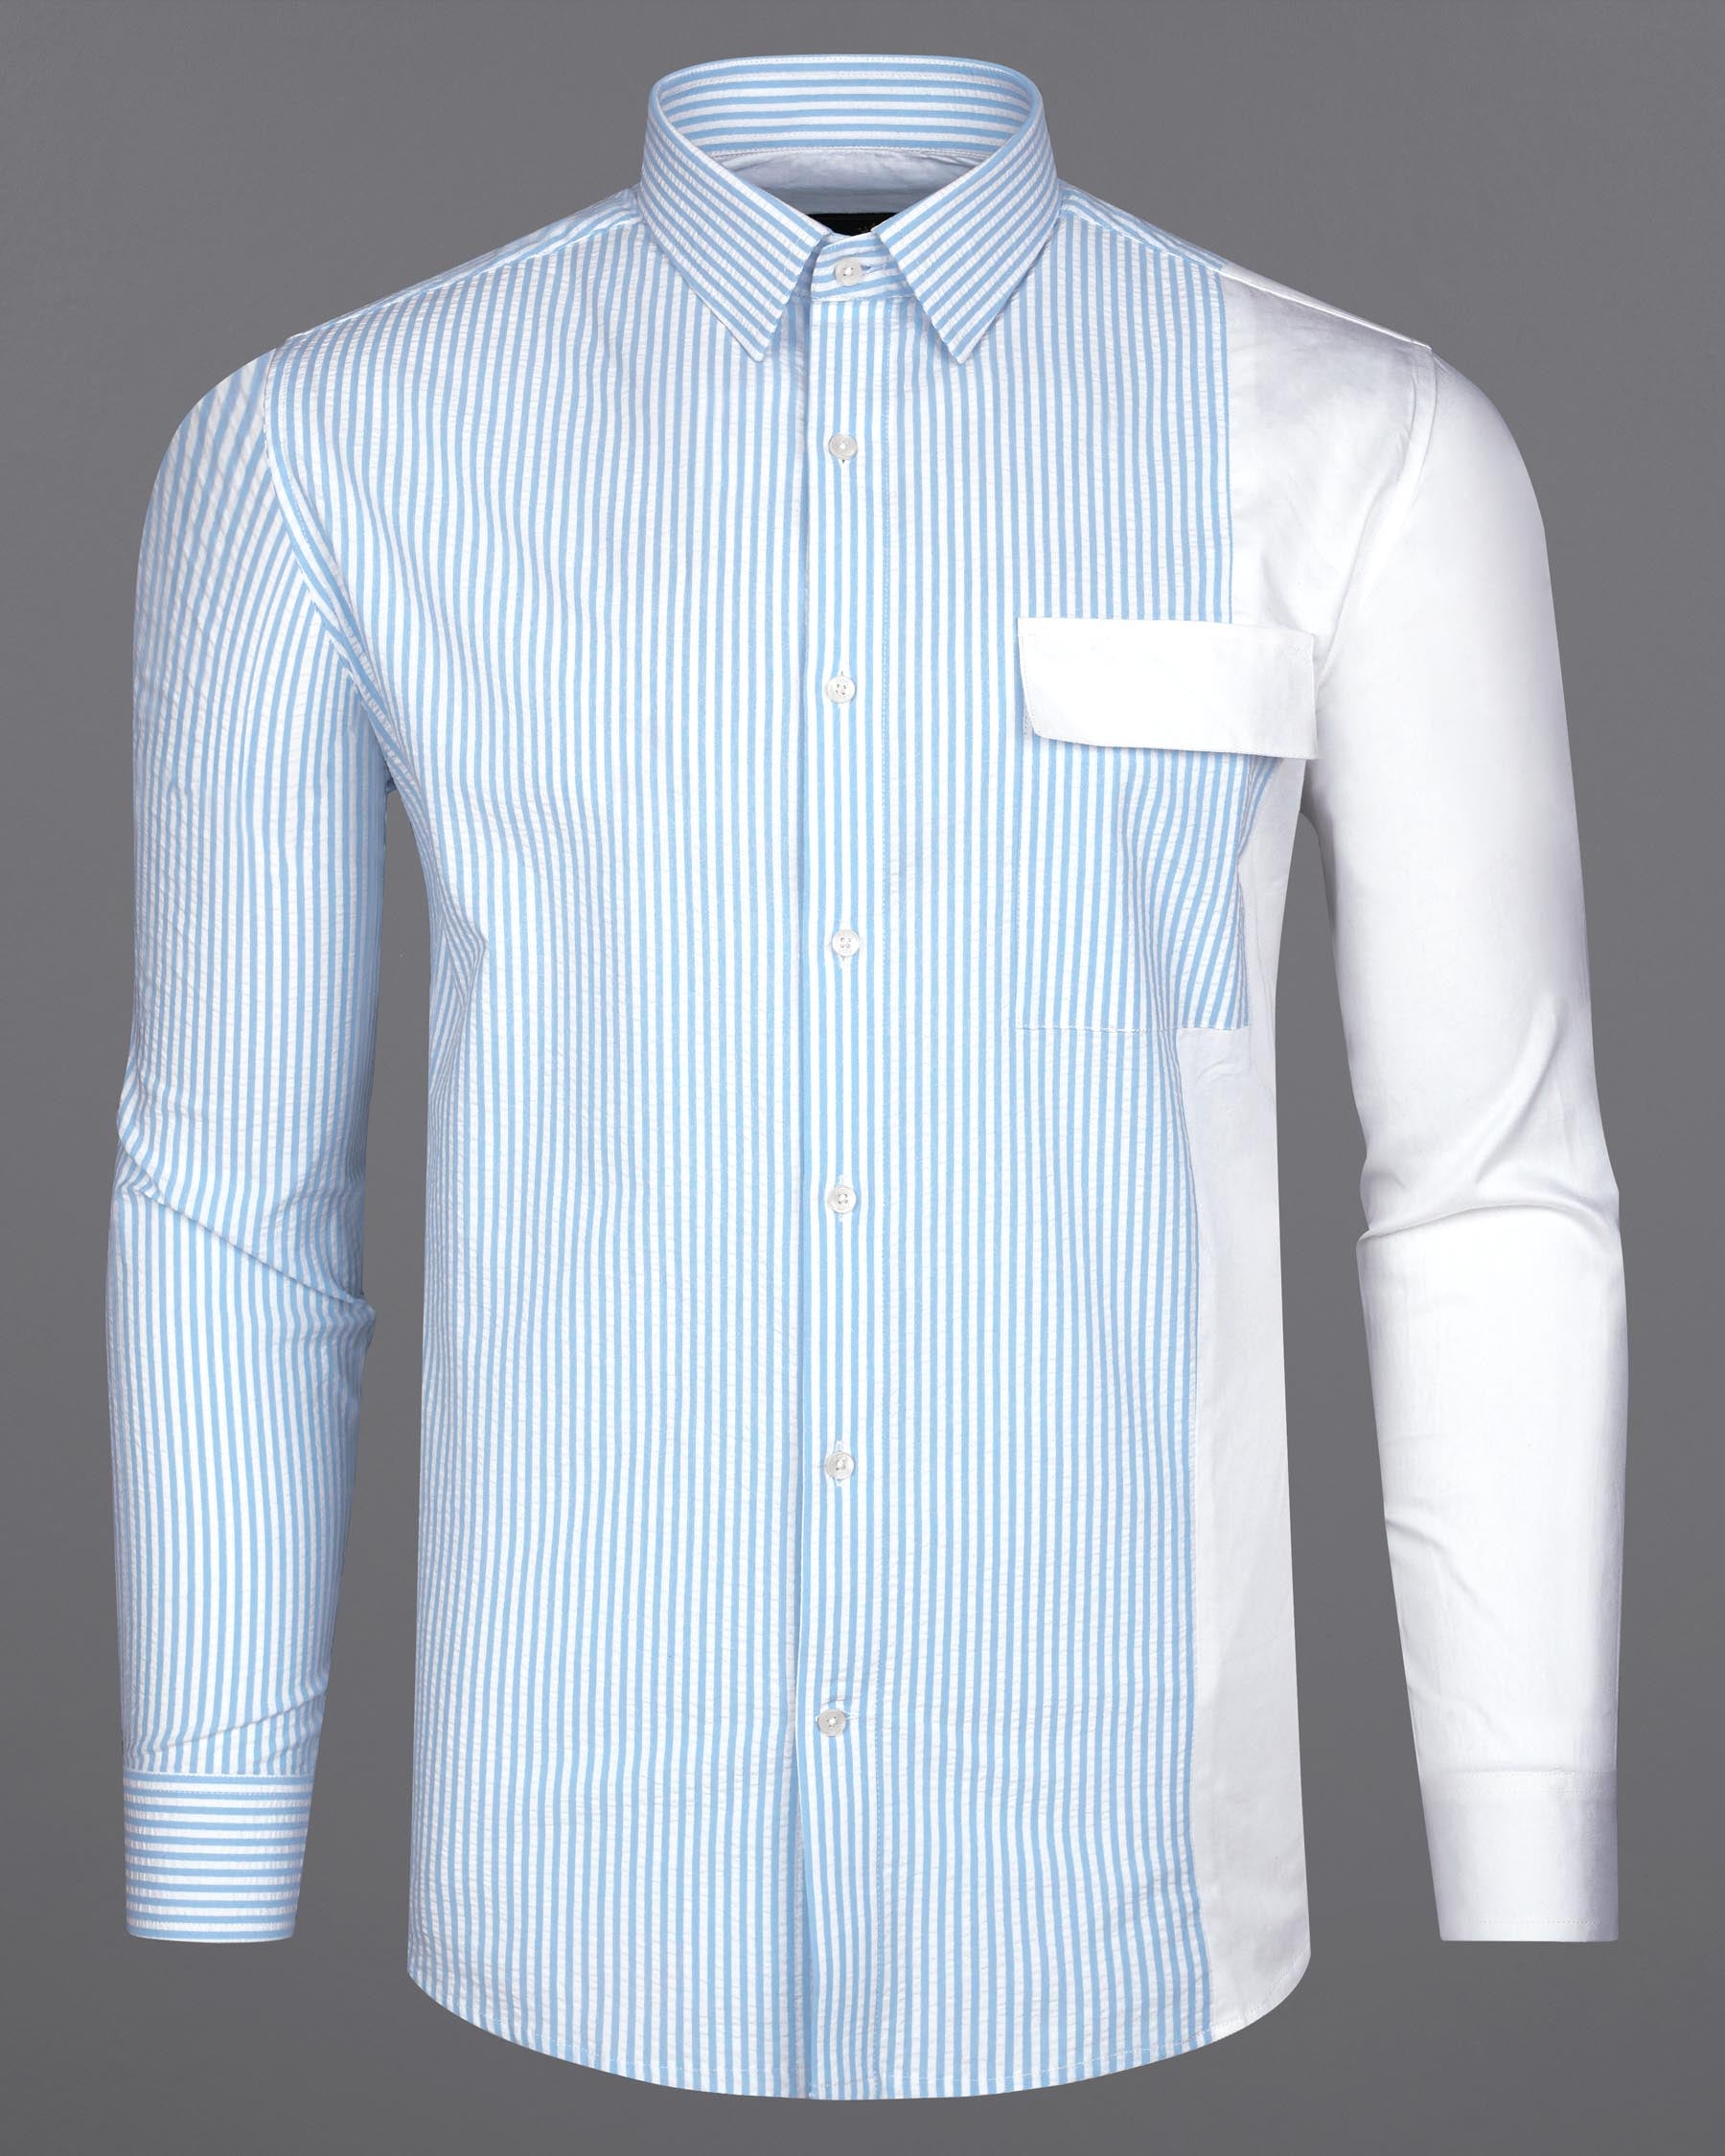 Casper Blue and White Pin Striped Premium Cotton Designer Shirt 7854-P111-38, 7854-P111-39, 7854-P111-40, 7854-P111-42, 7854-P111-44, 7854-P111-46, 7854-P111-48, 7854-P111-50, 7854-P111-52